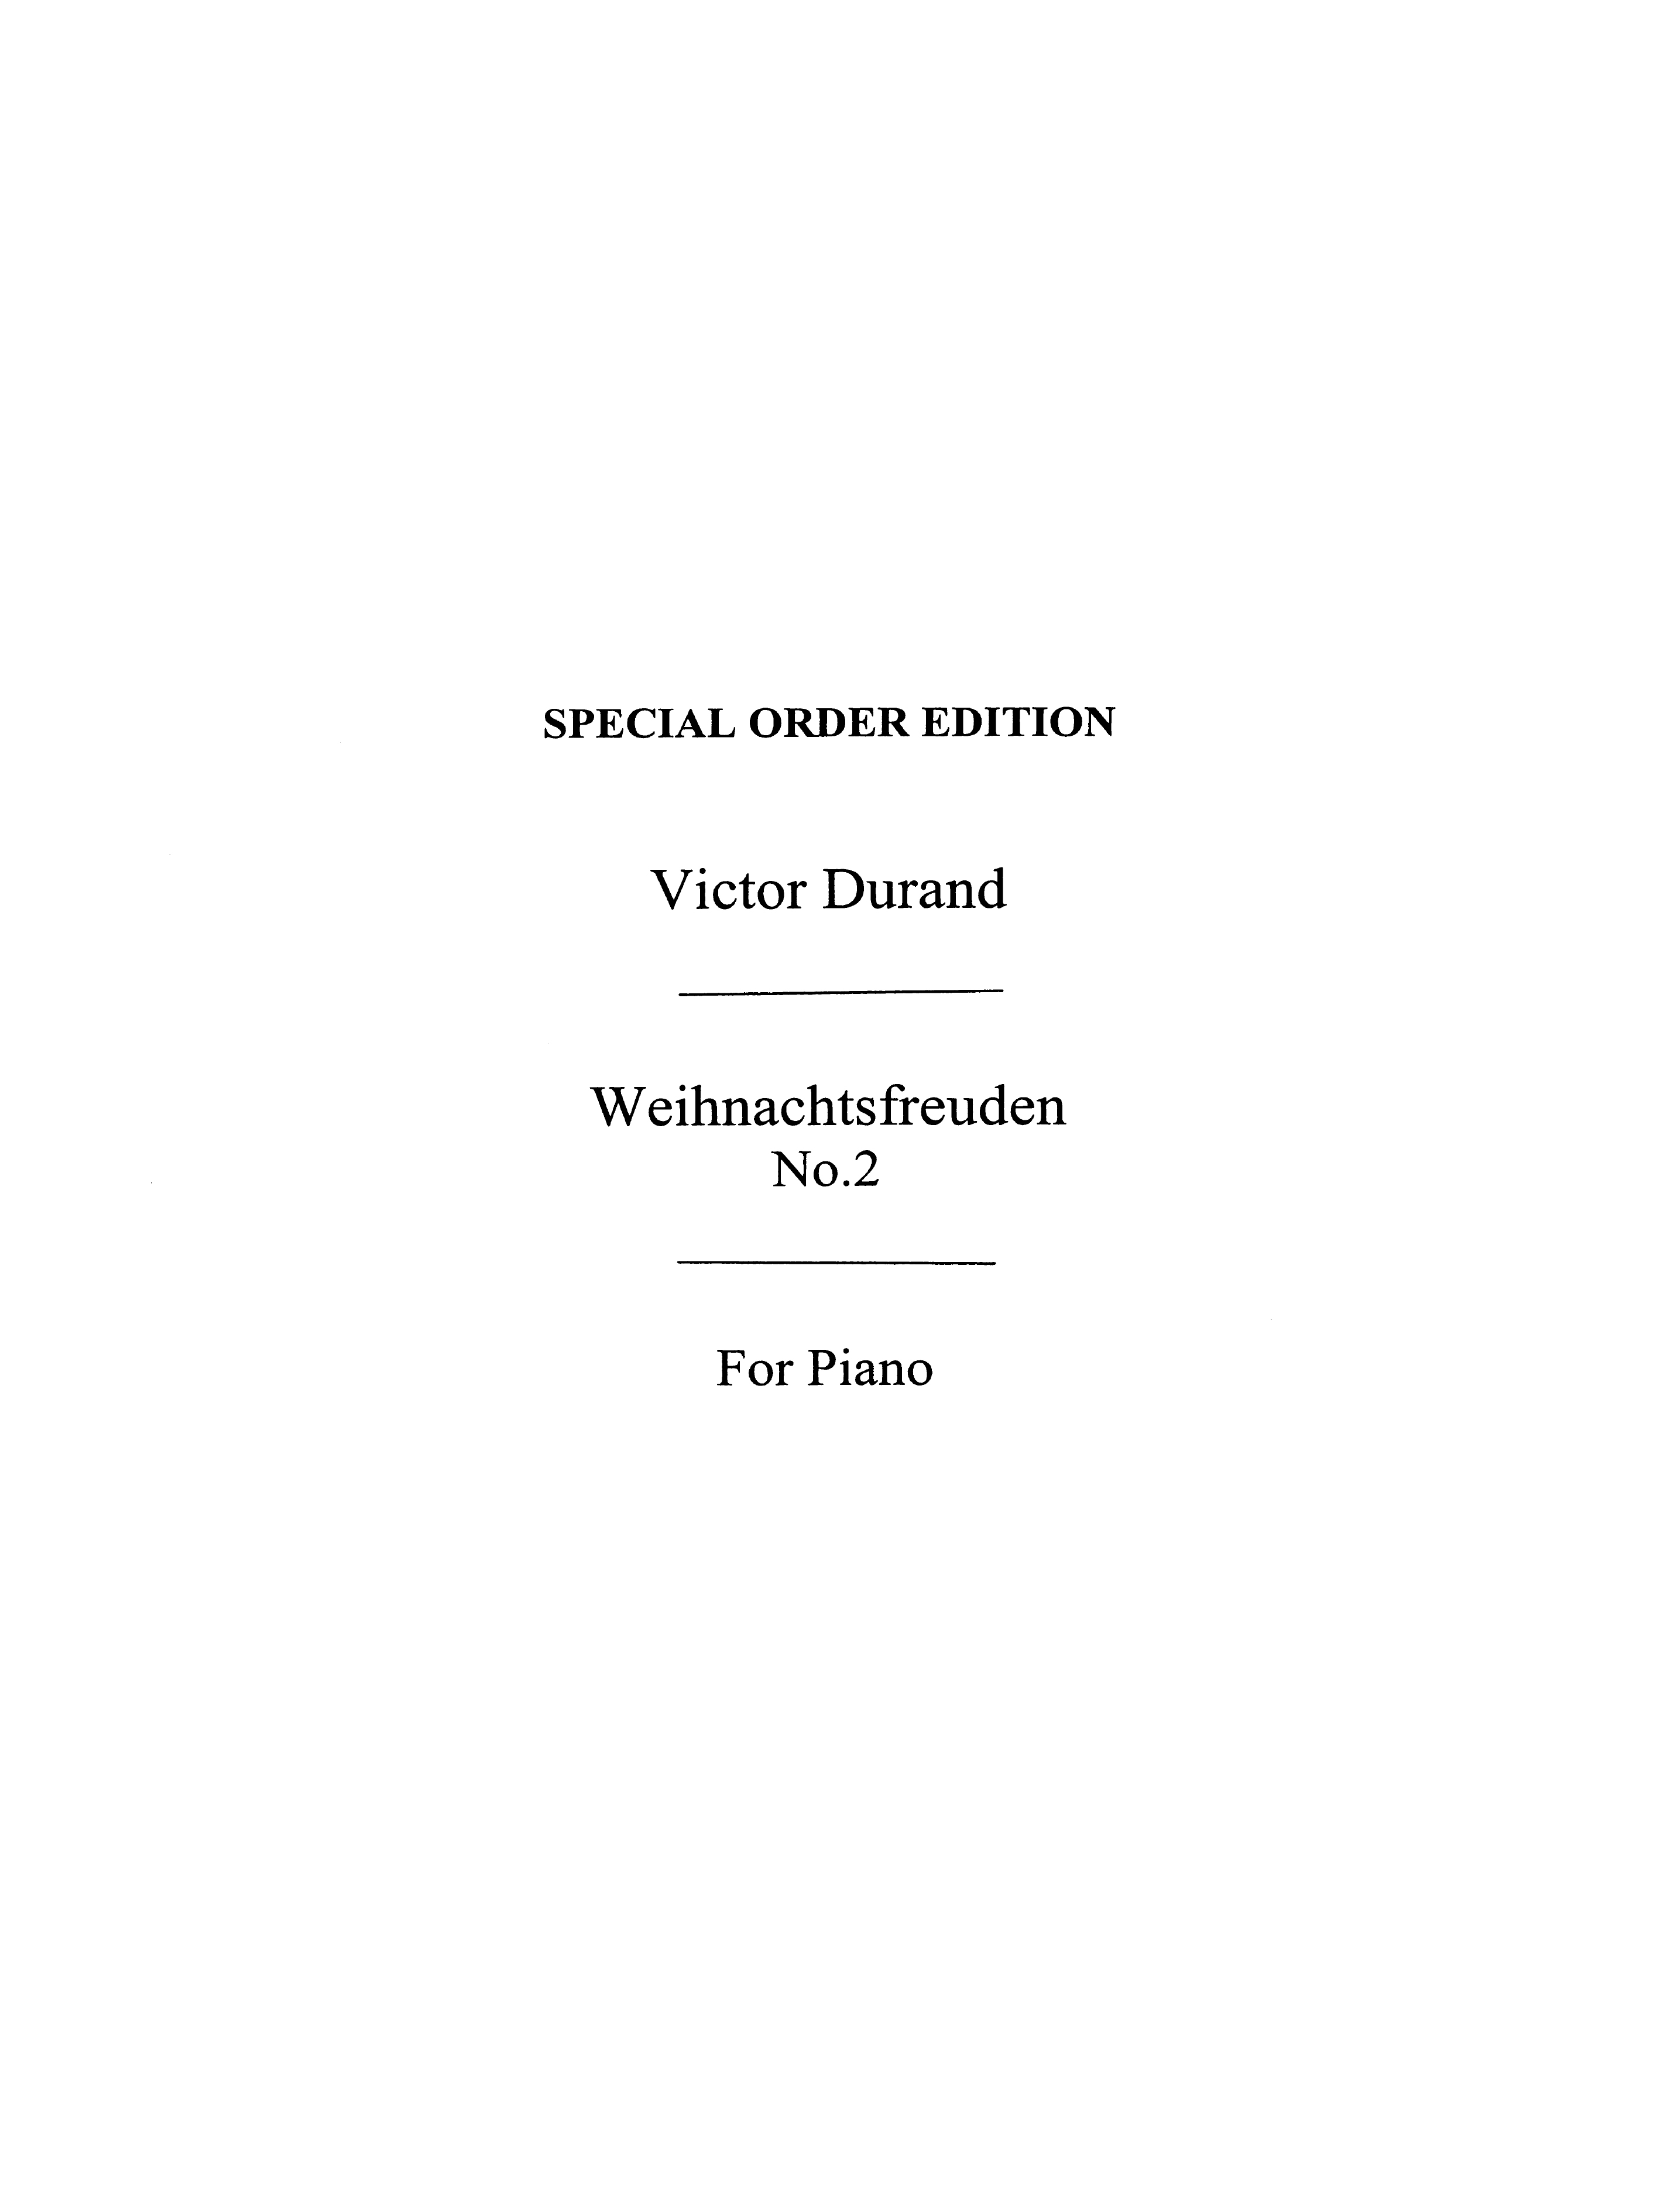 Durand, Victor Weihnachts-freuden No.2 Piano